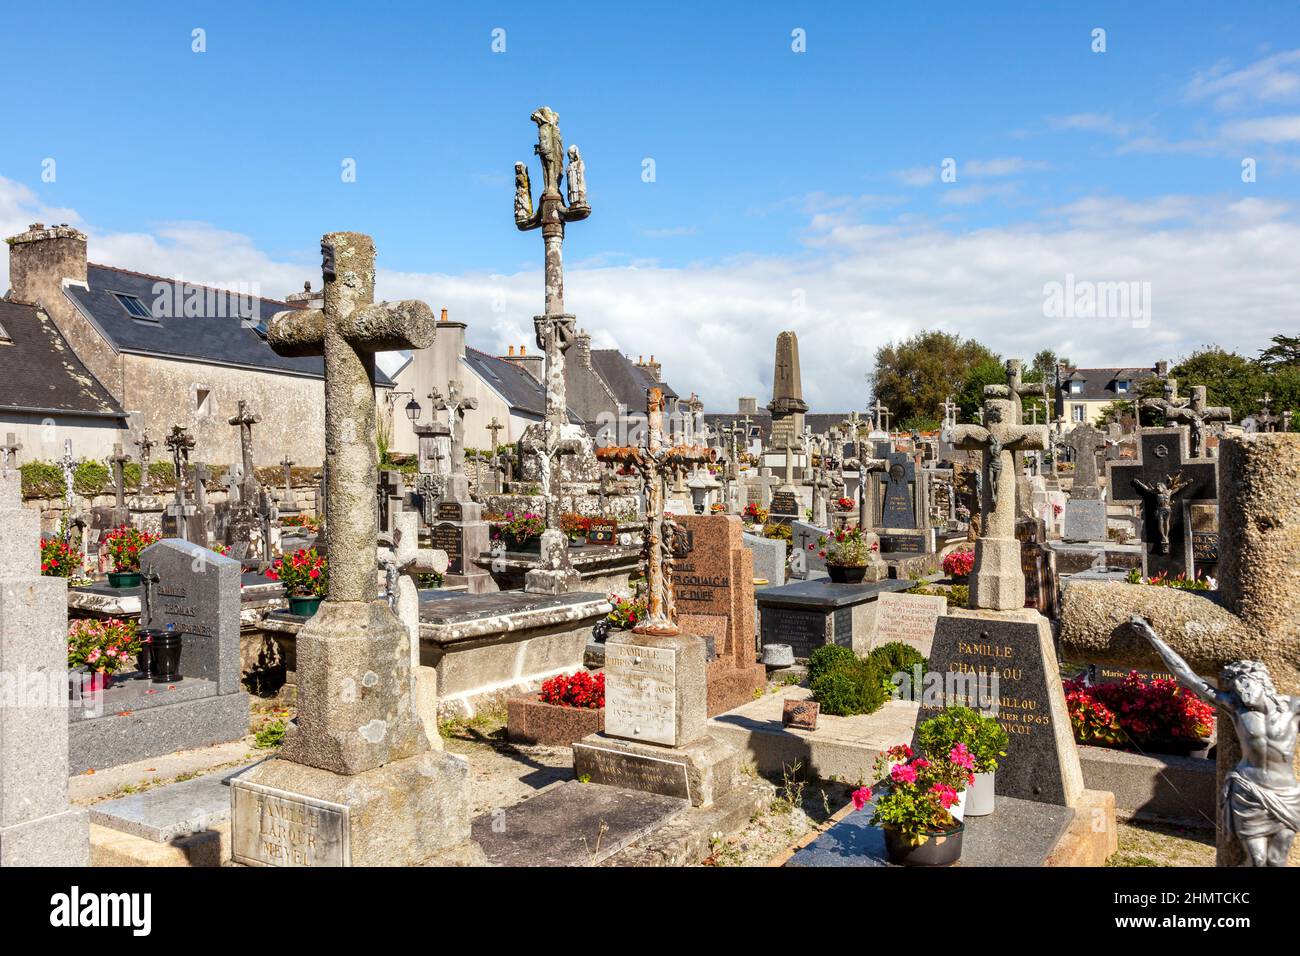 France, Brittany, Finistere, Locronan, labelled Les plus Beaux Villages de France (The Most Beautiful Villages of France), Saint Ronan church Stock Photo